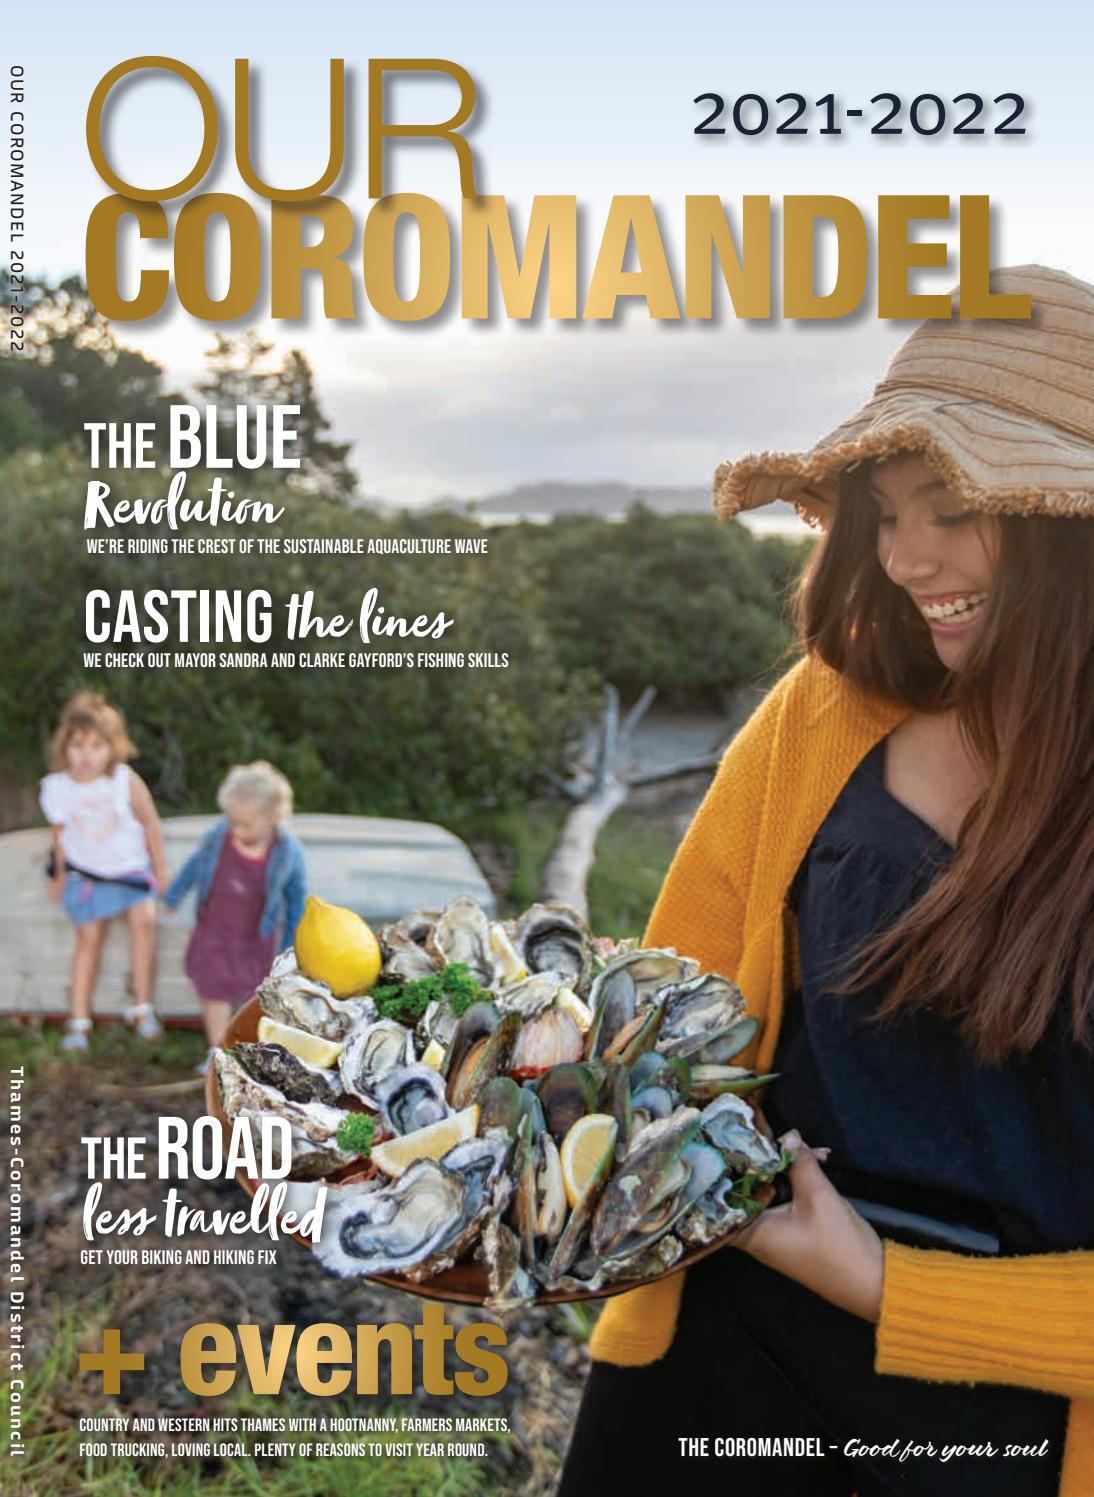 Our Coromandel Magazine 2021/22